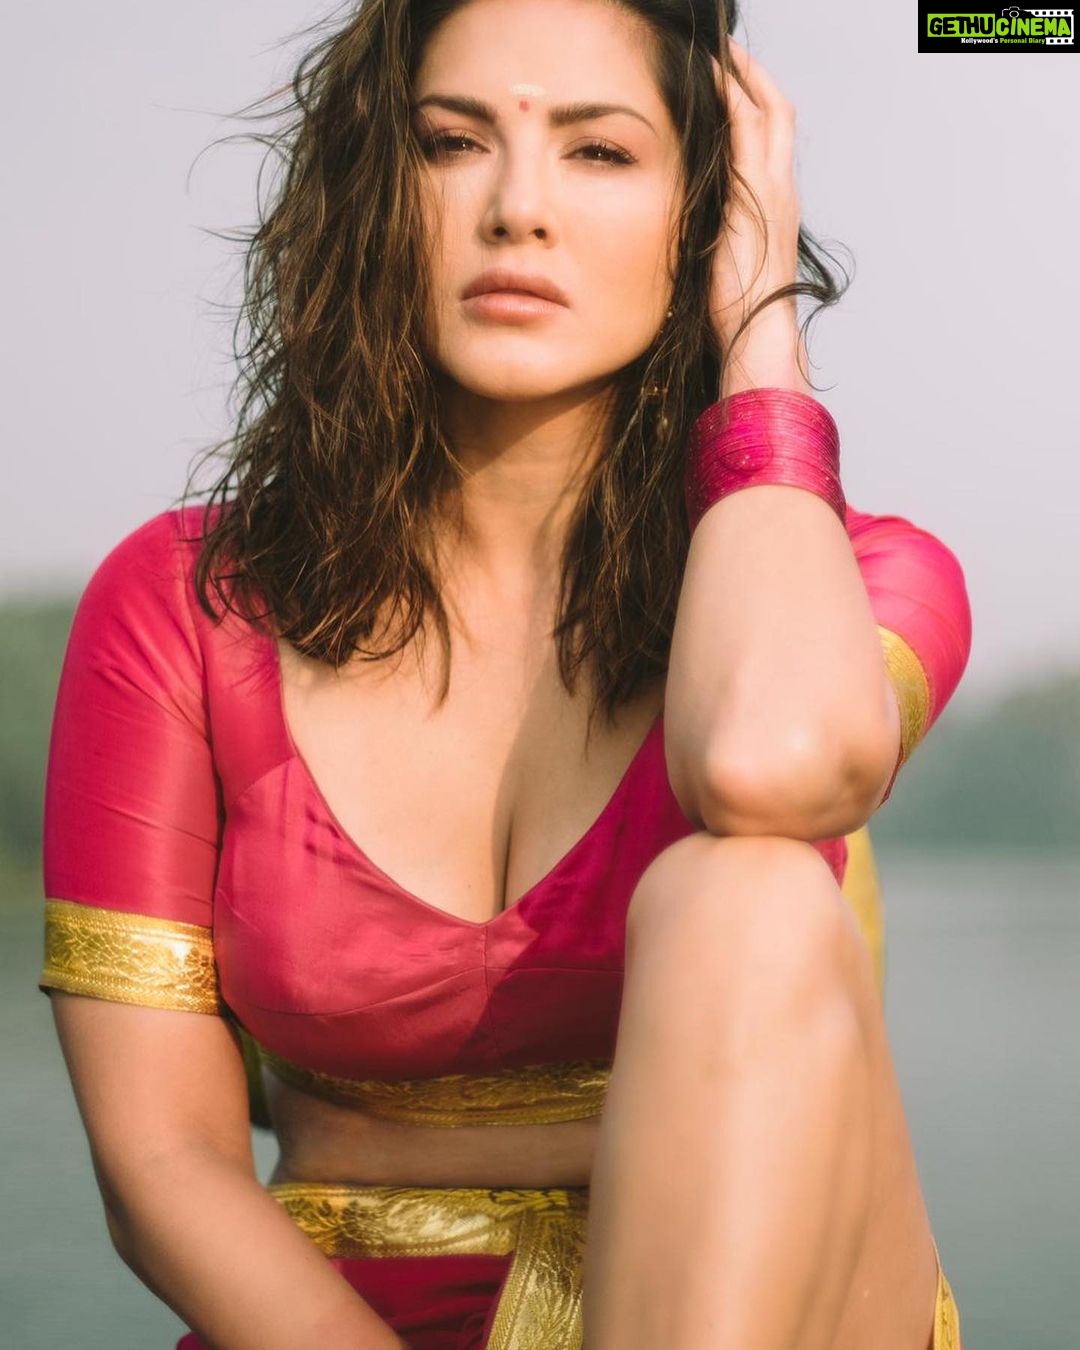 X3 Sunny - Actress Sunny Leone Instagram Photos and Posts - February 2021 - Gethu  Cinema